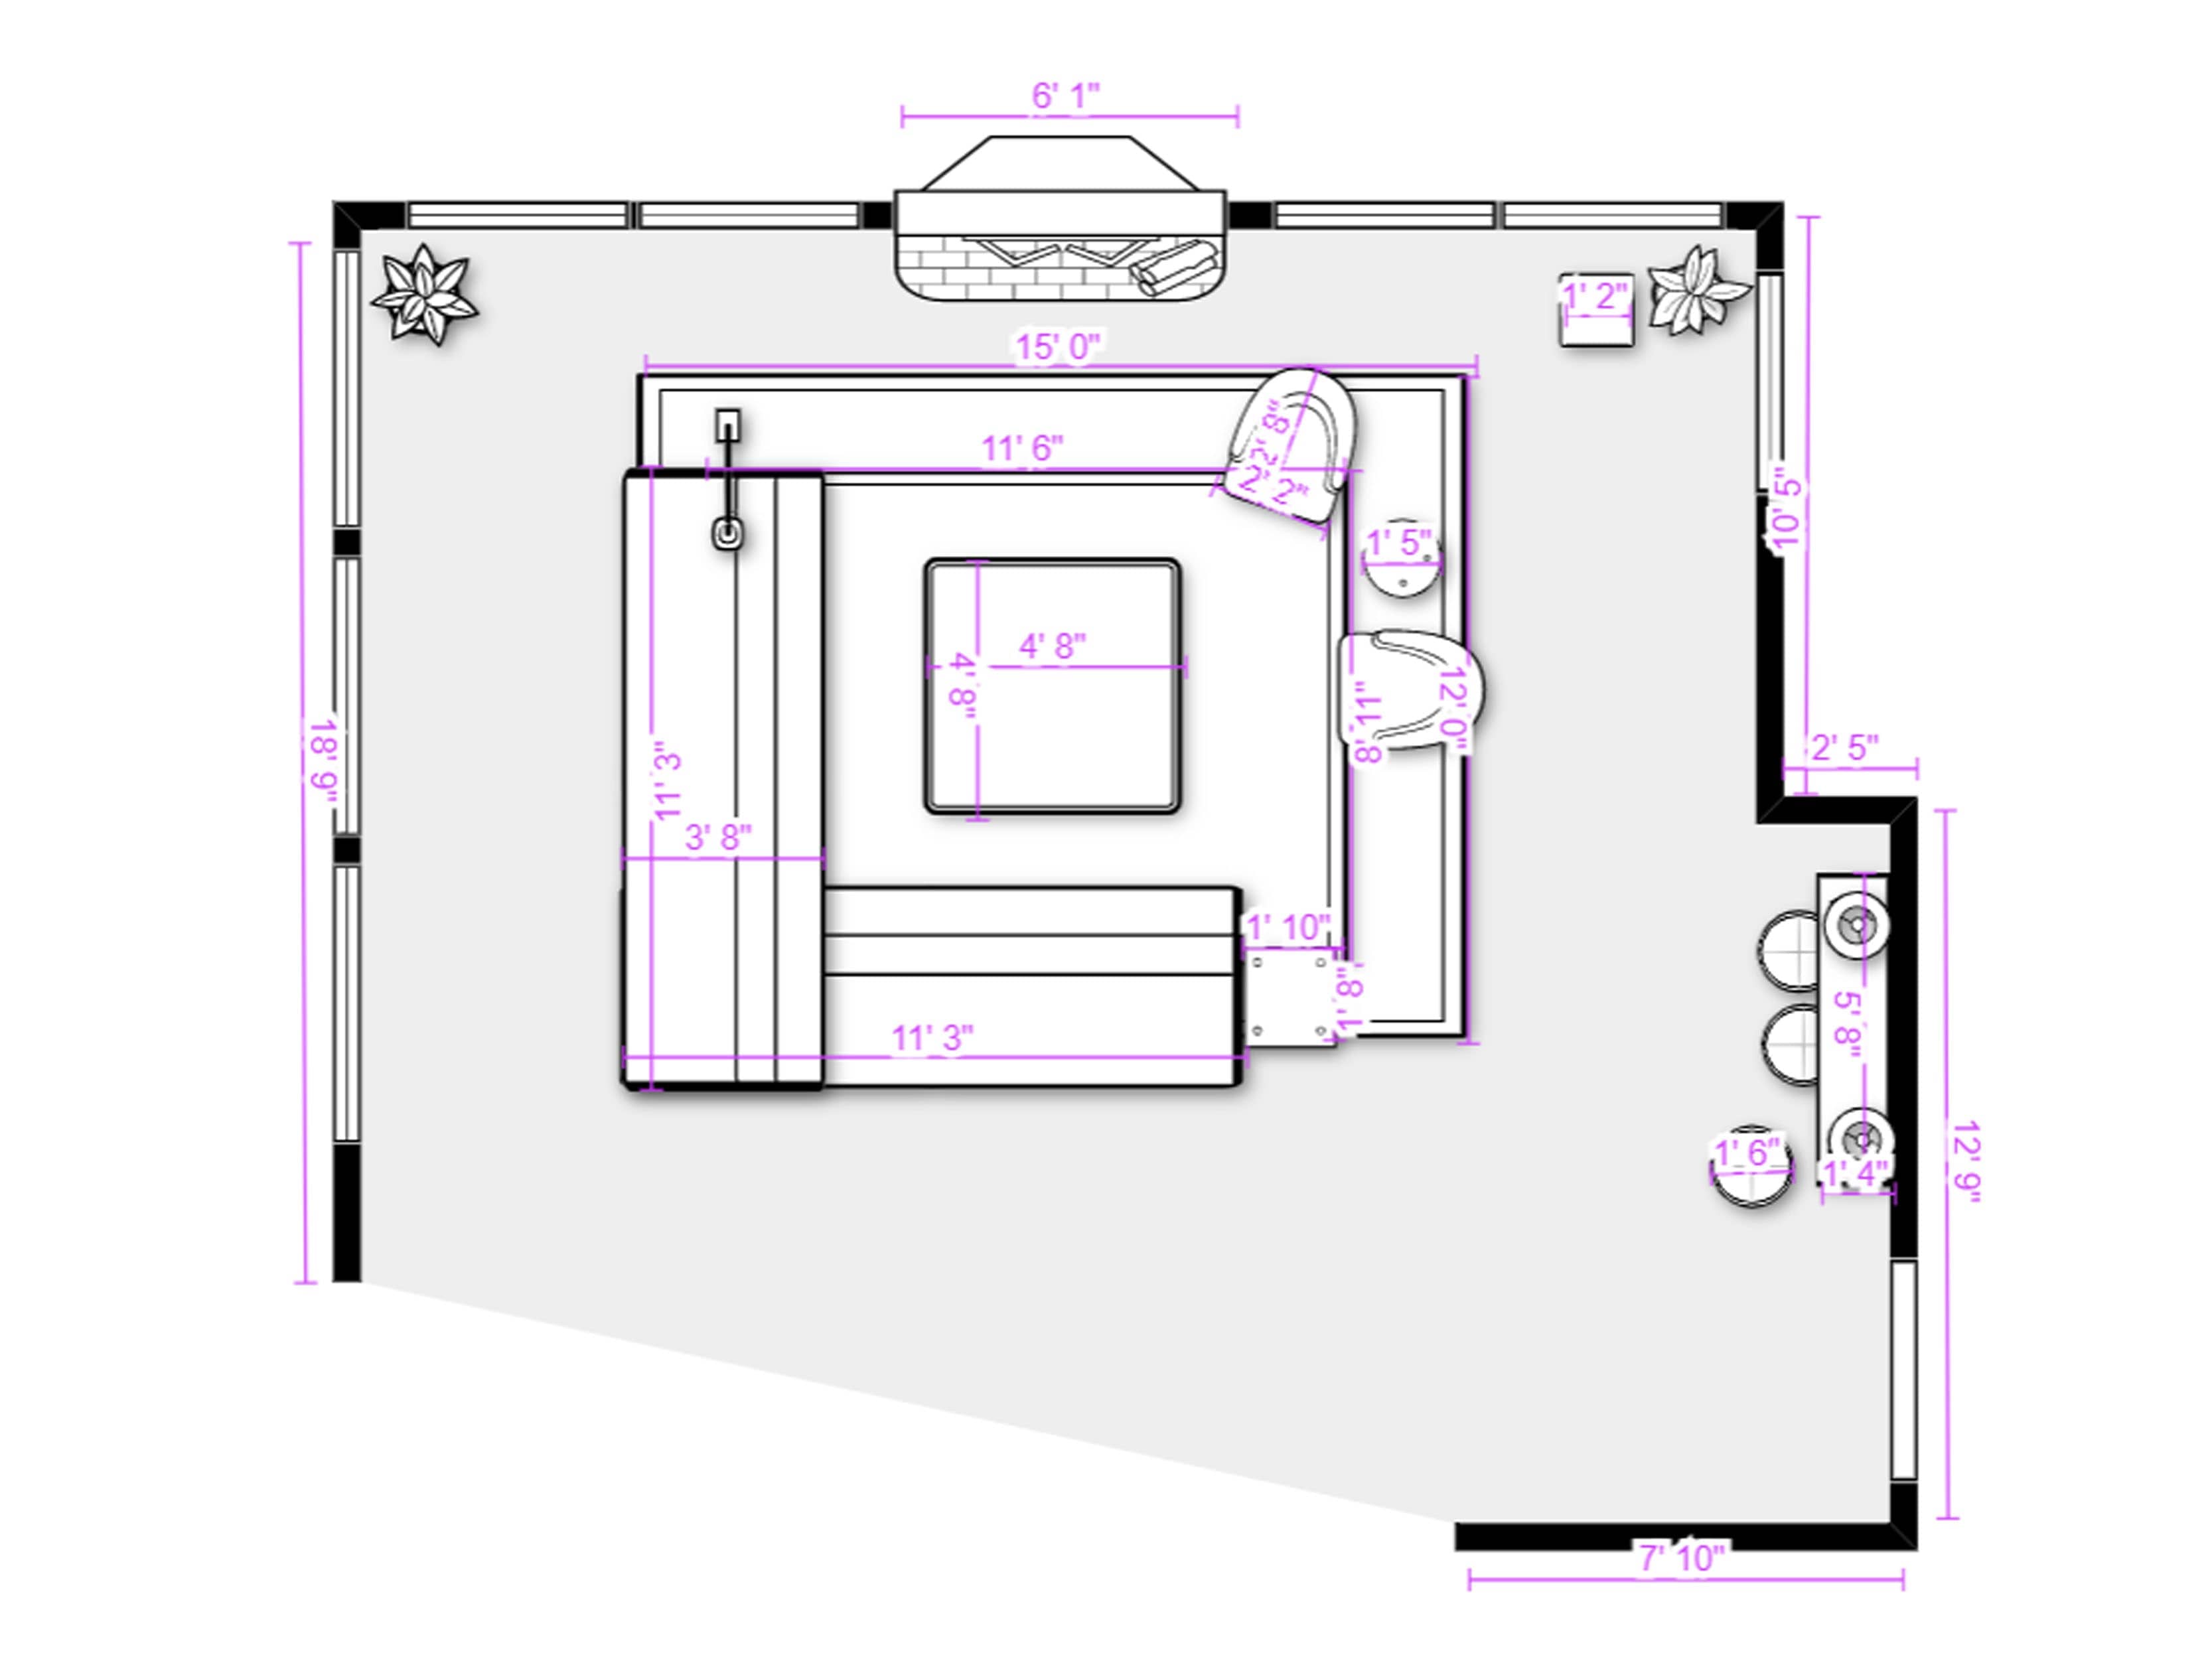 Stuccco design floor plan